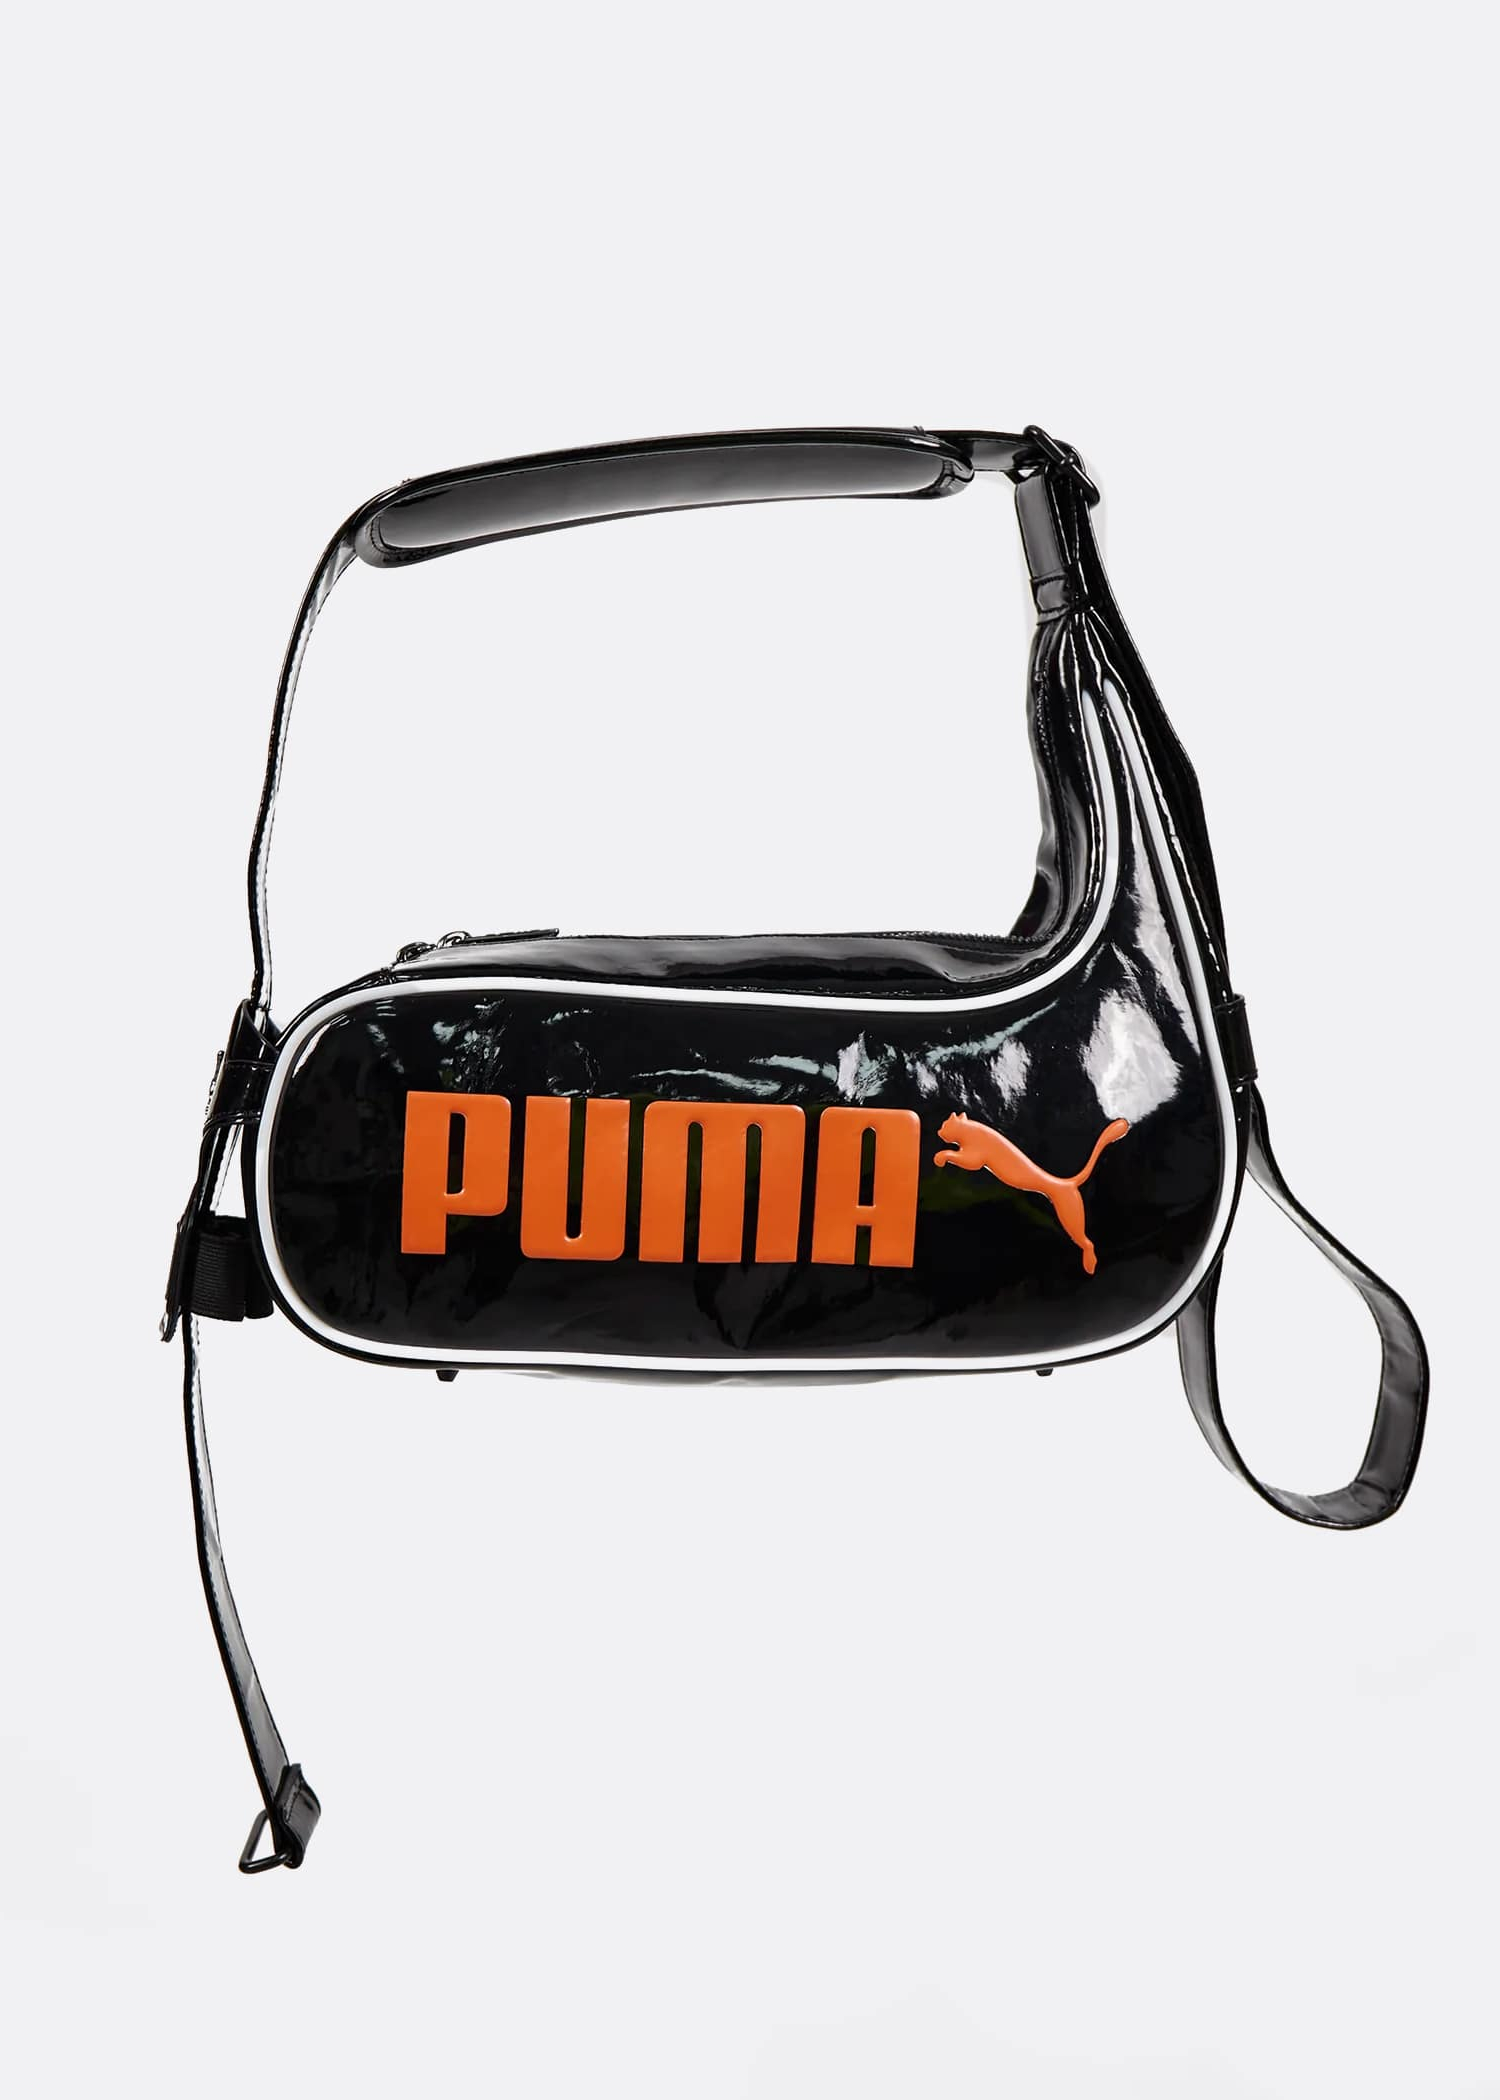 PUMA X Ottolinger Black Racer Bag